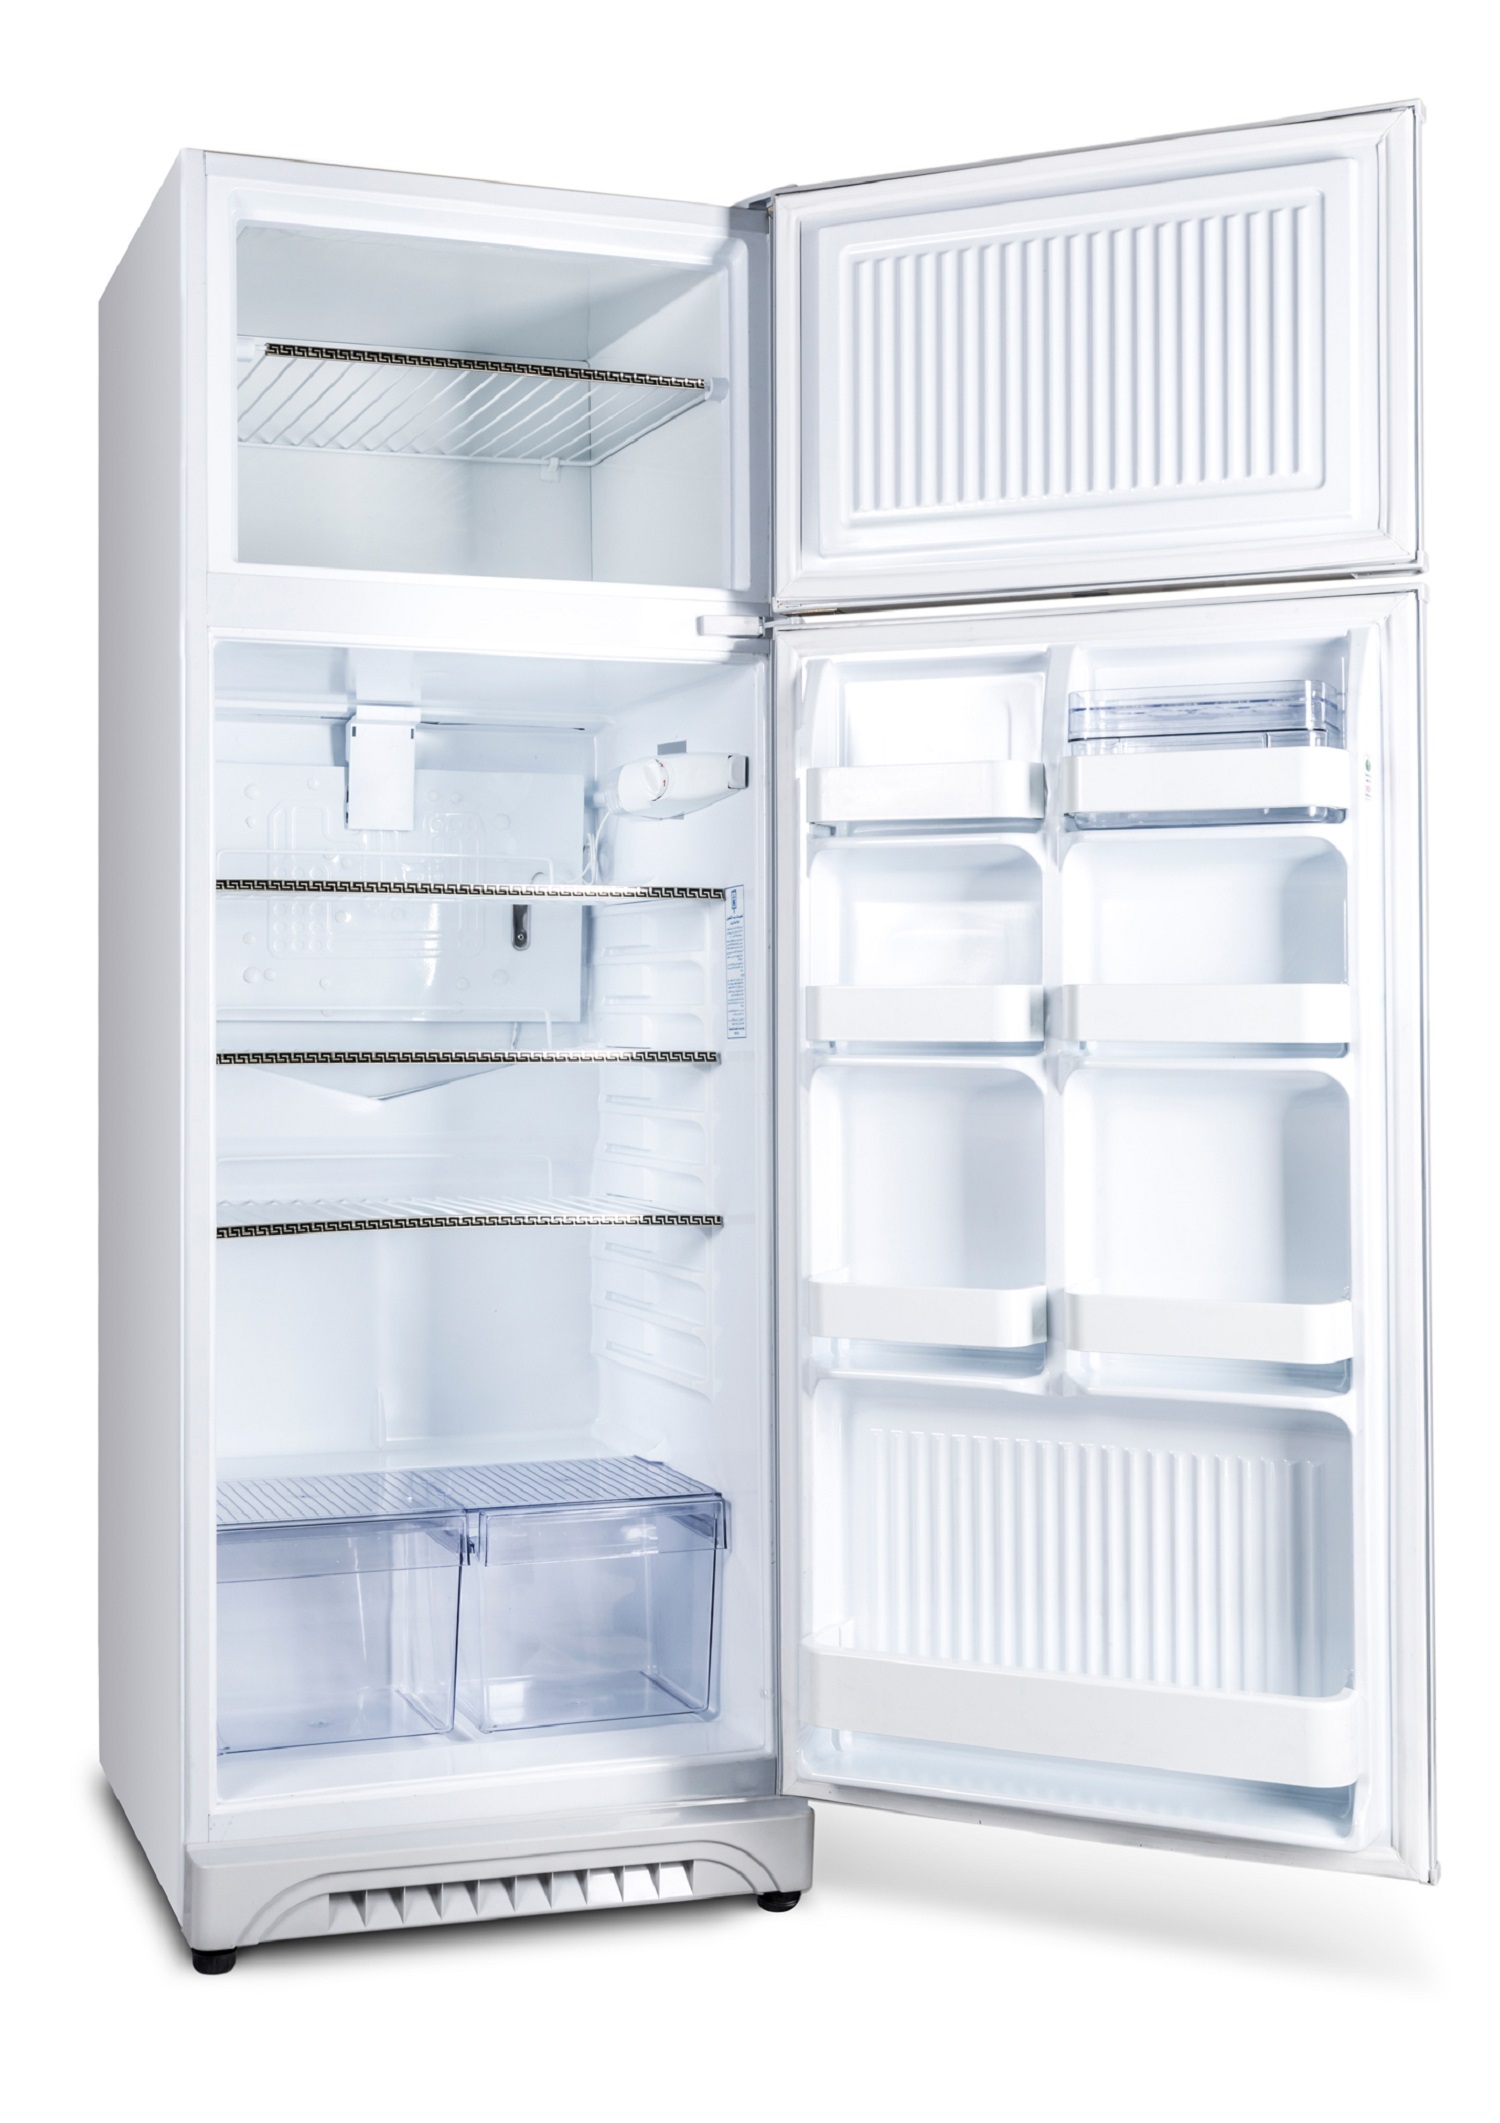 Kiriazi Refrigerator K 330/1 - 12 Feet ثلاجة كريازى 330/1 - 12قدم